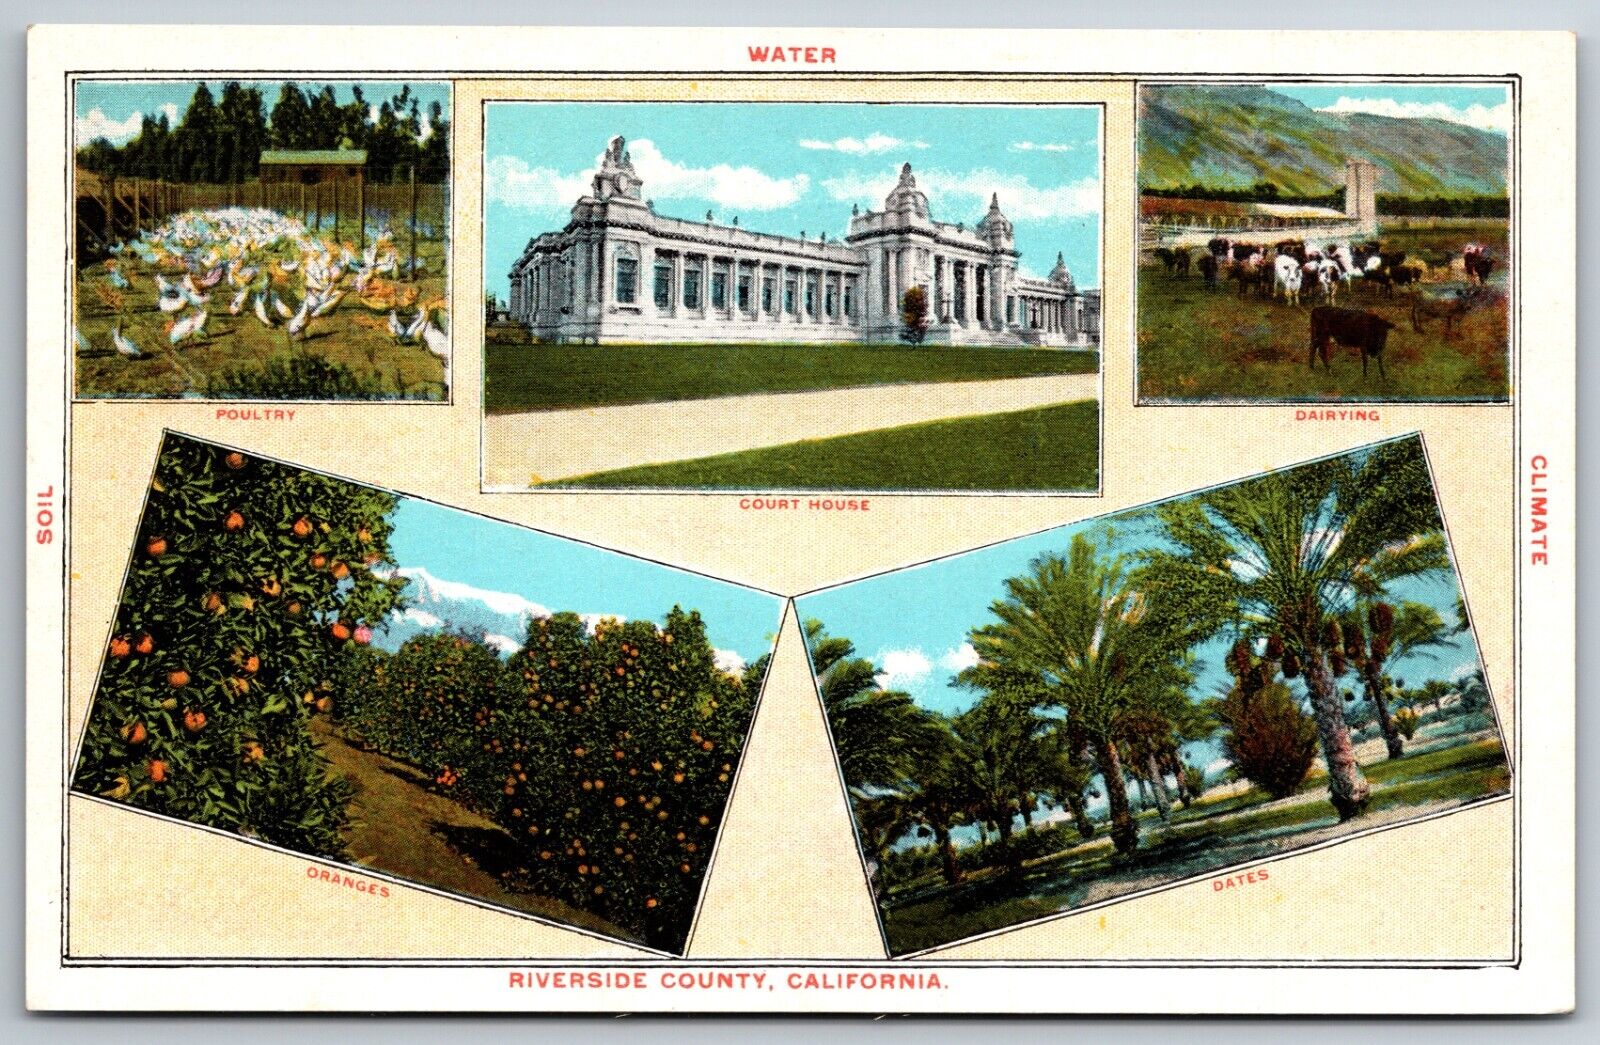 Riverside County Multi View Soil Water Climate Oranges Dates California Postcard